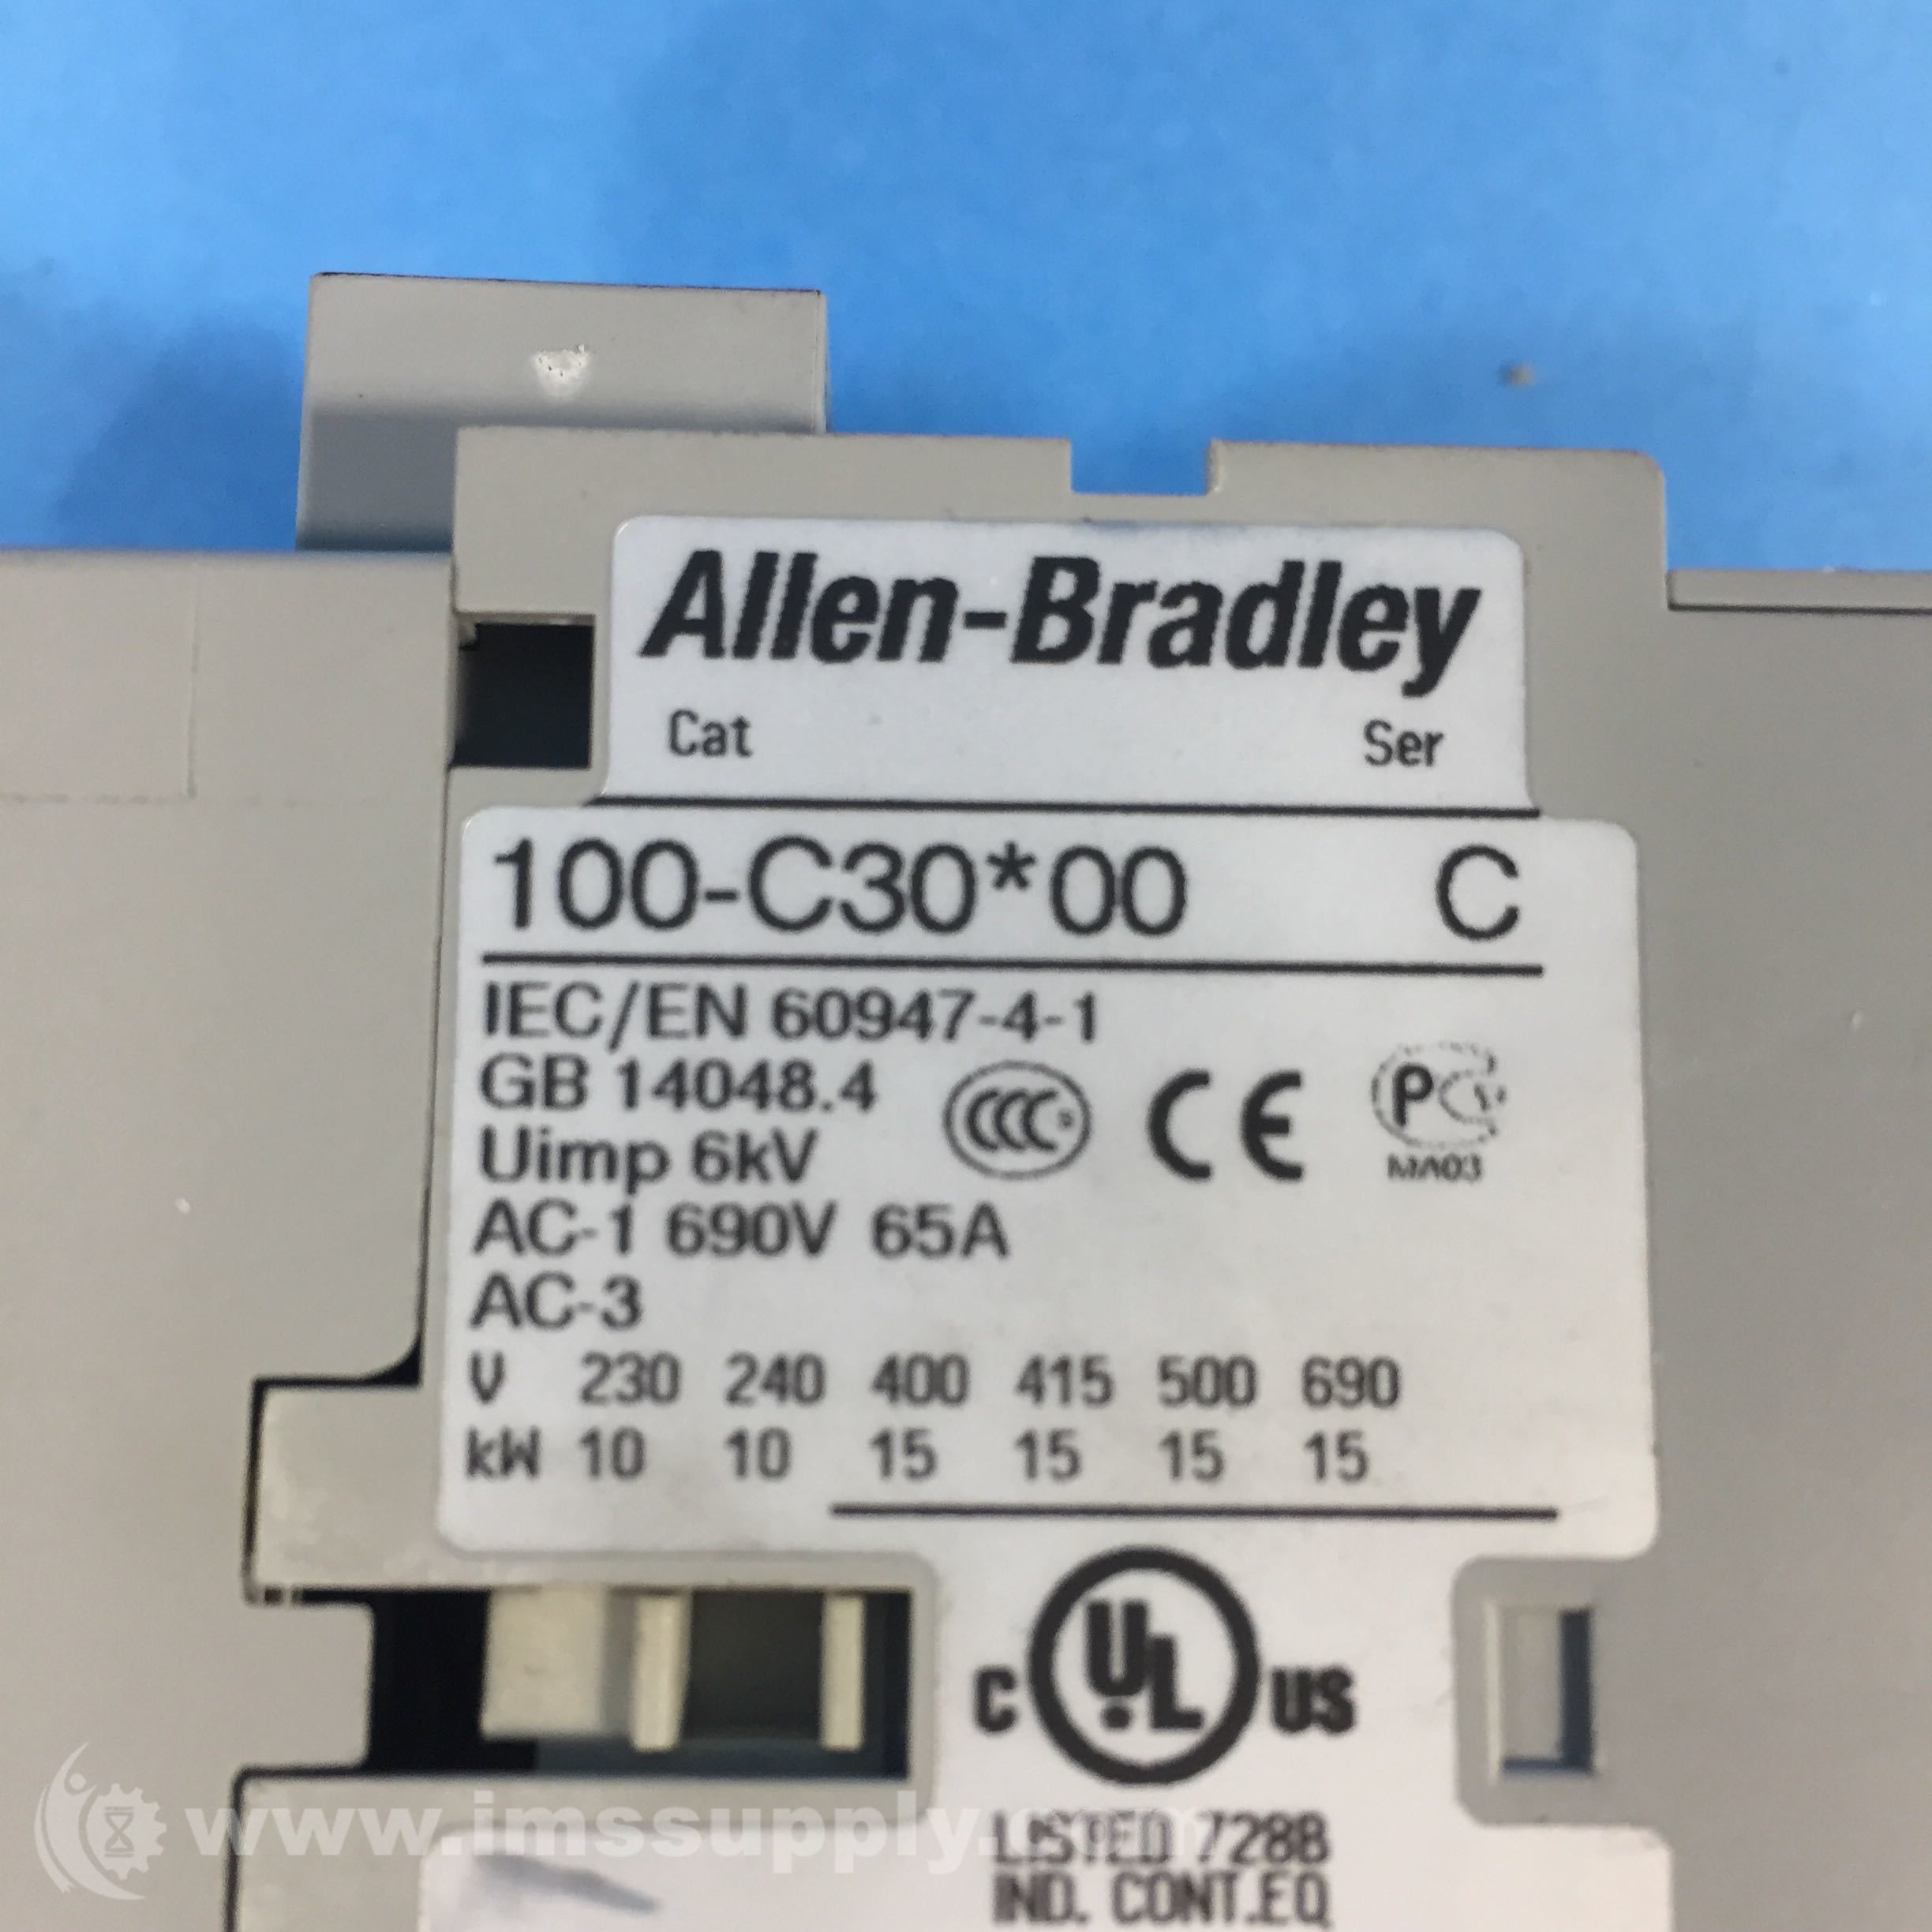 Allen Bradley 100-C30*00 Series C 3 Phase IEC Contactor, AC Coil